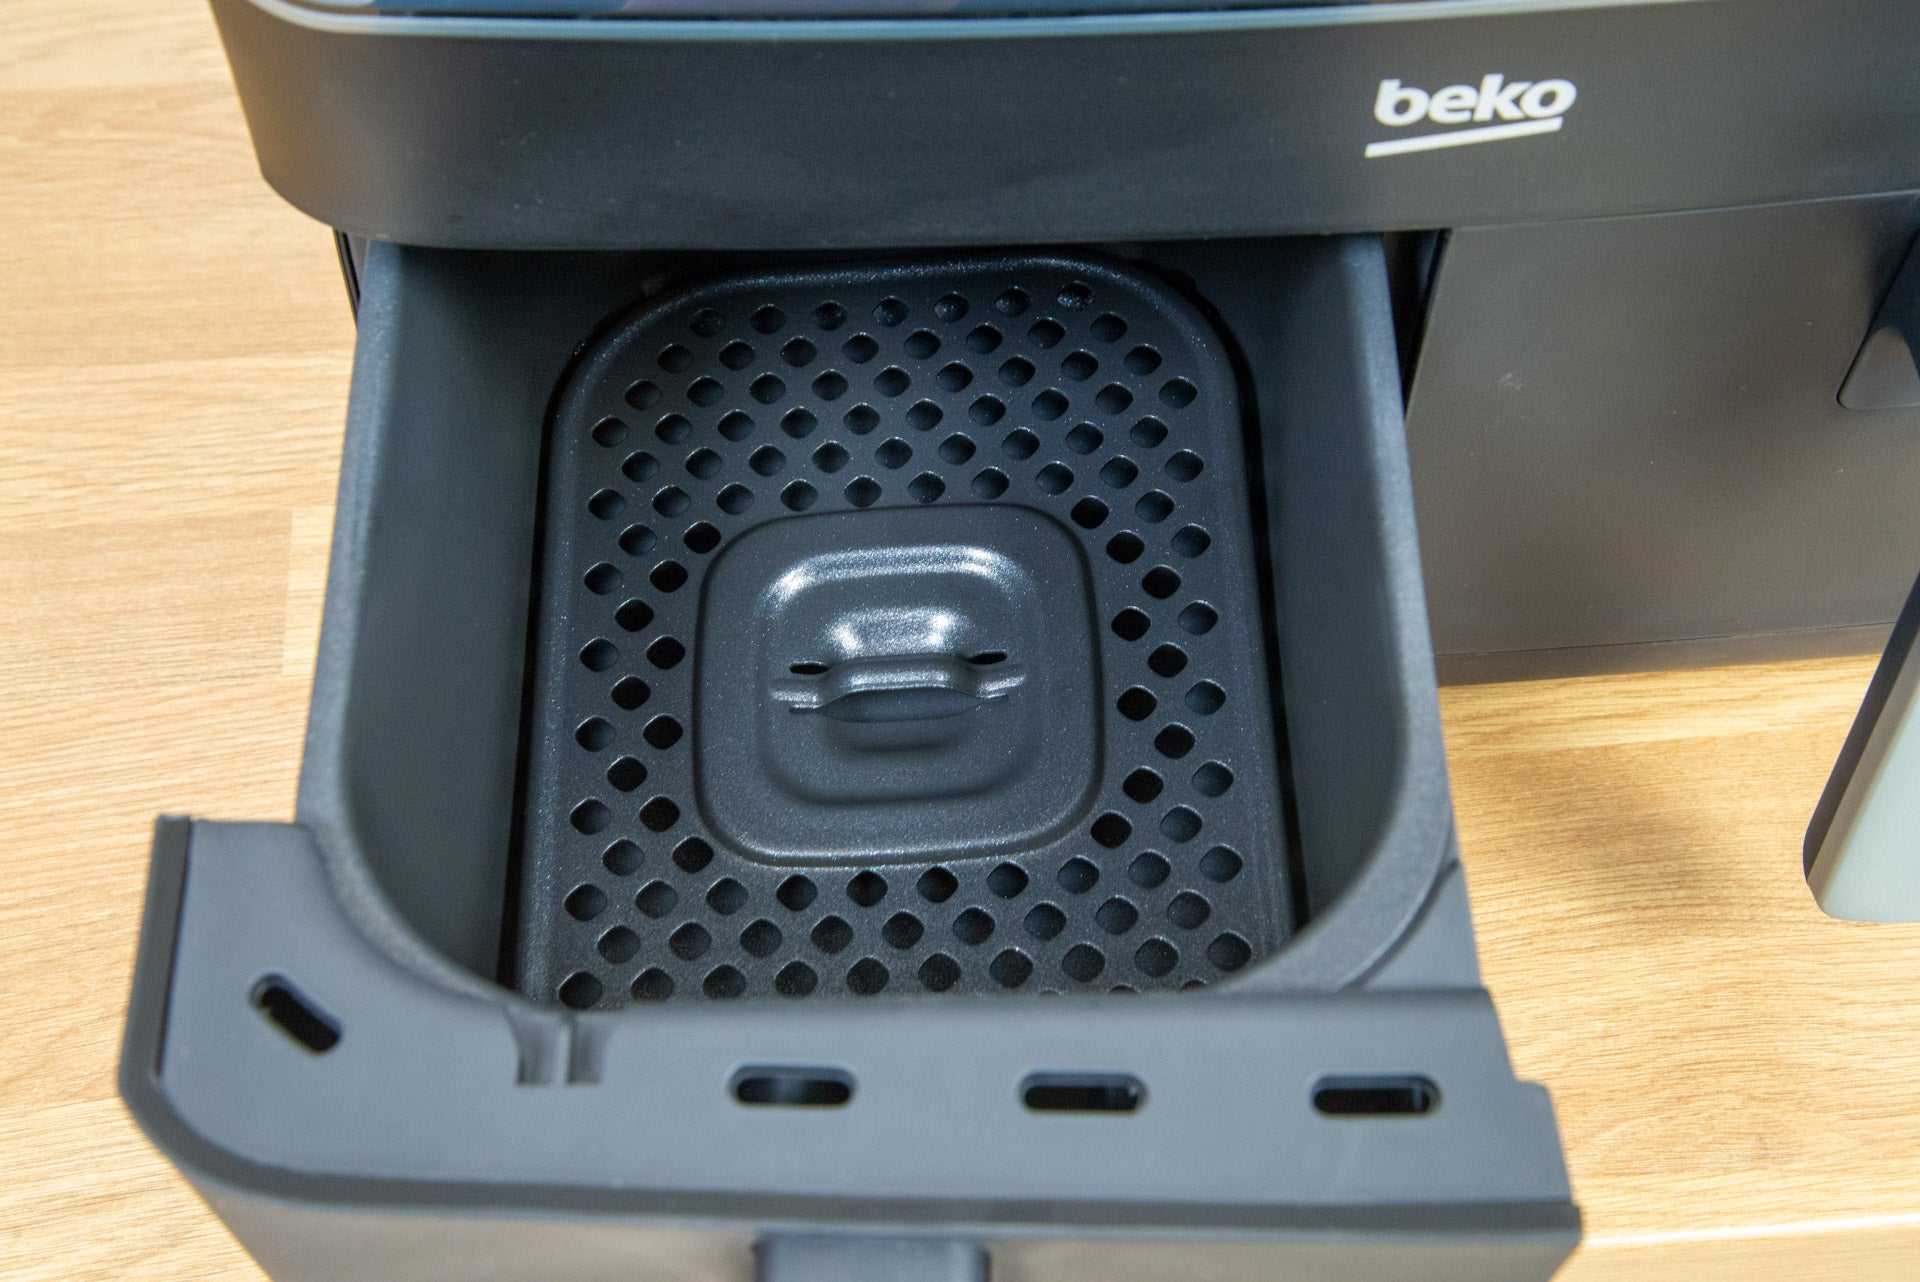 Beko ExpertFry Dual Zone Air Fryer drawer